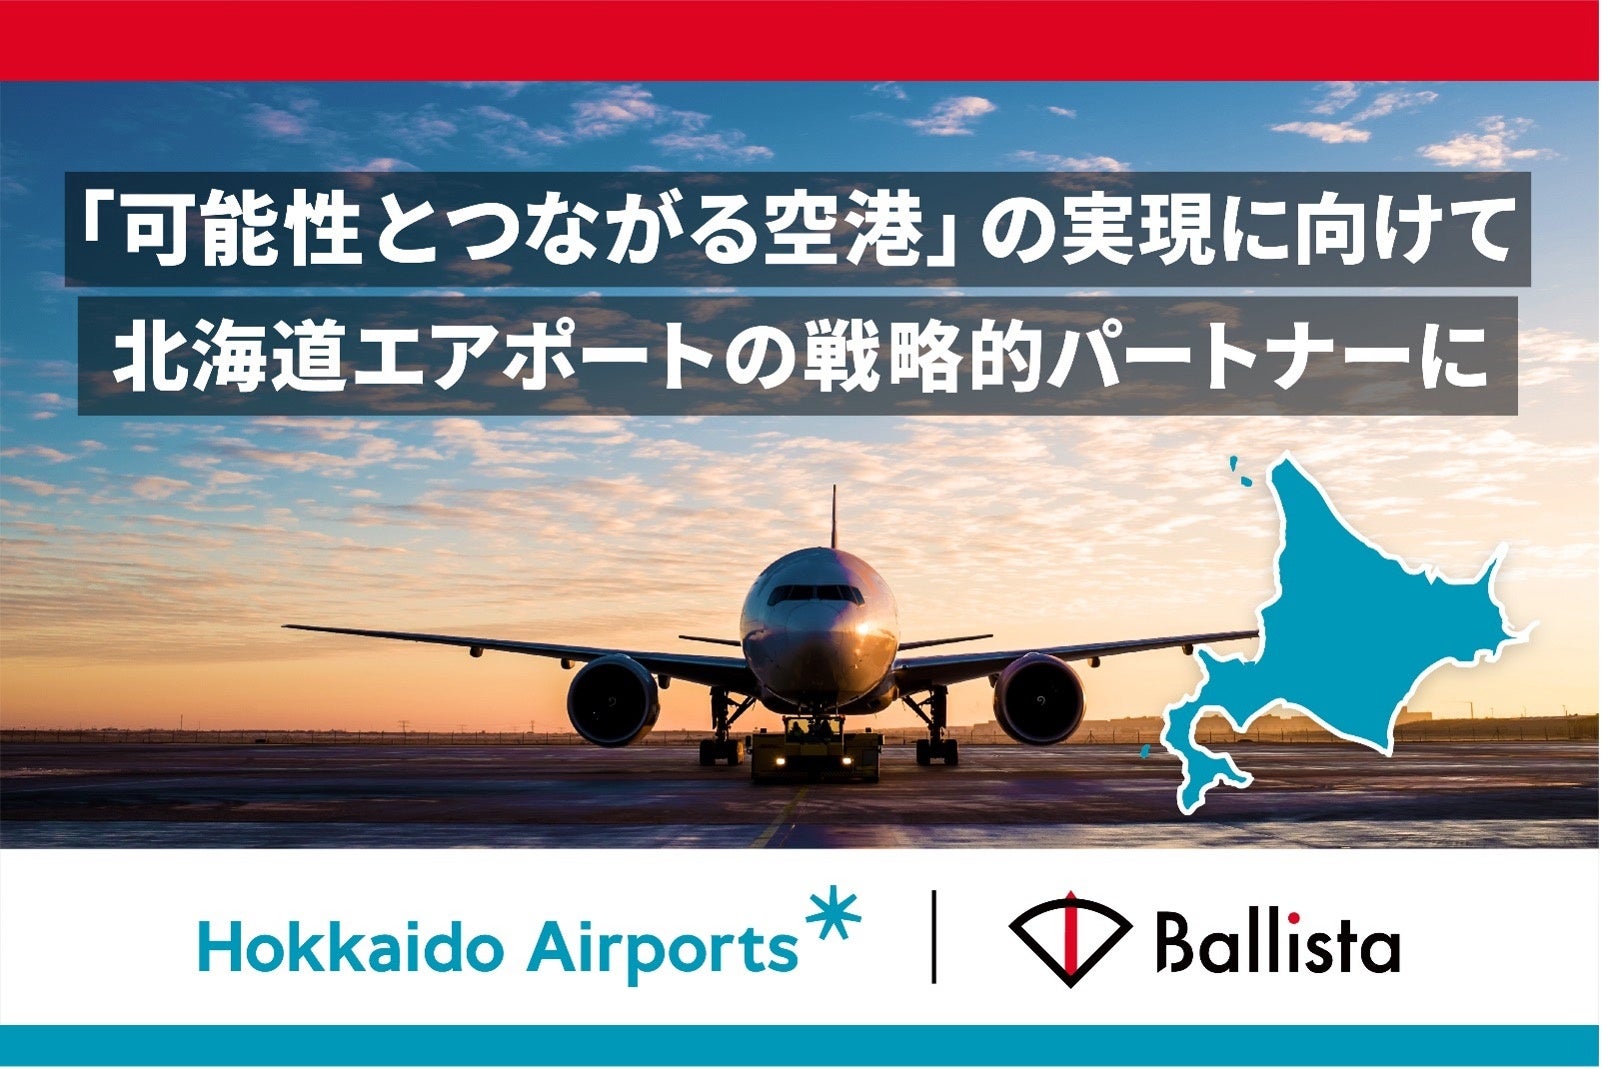 Ballista、「可能性とつながる空港」実現に向けて北海道エアポートの戦略的パートナーへ